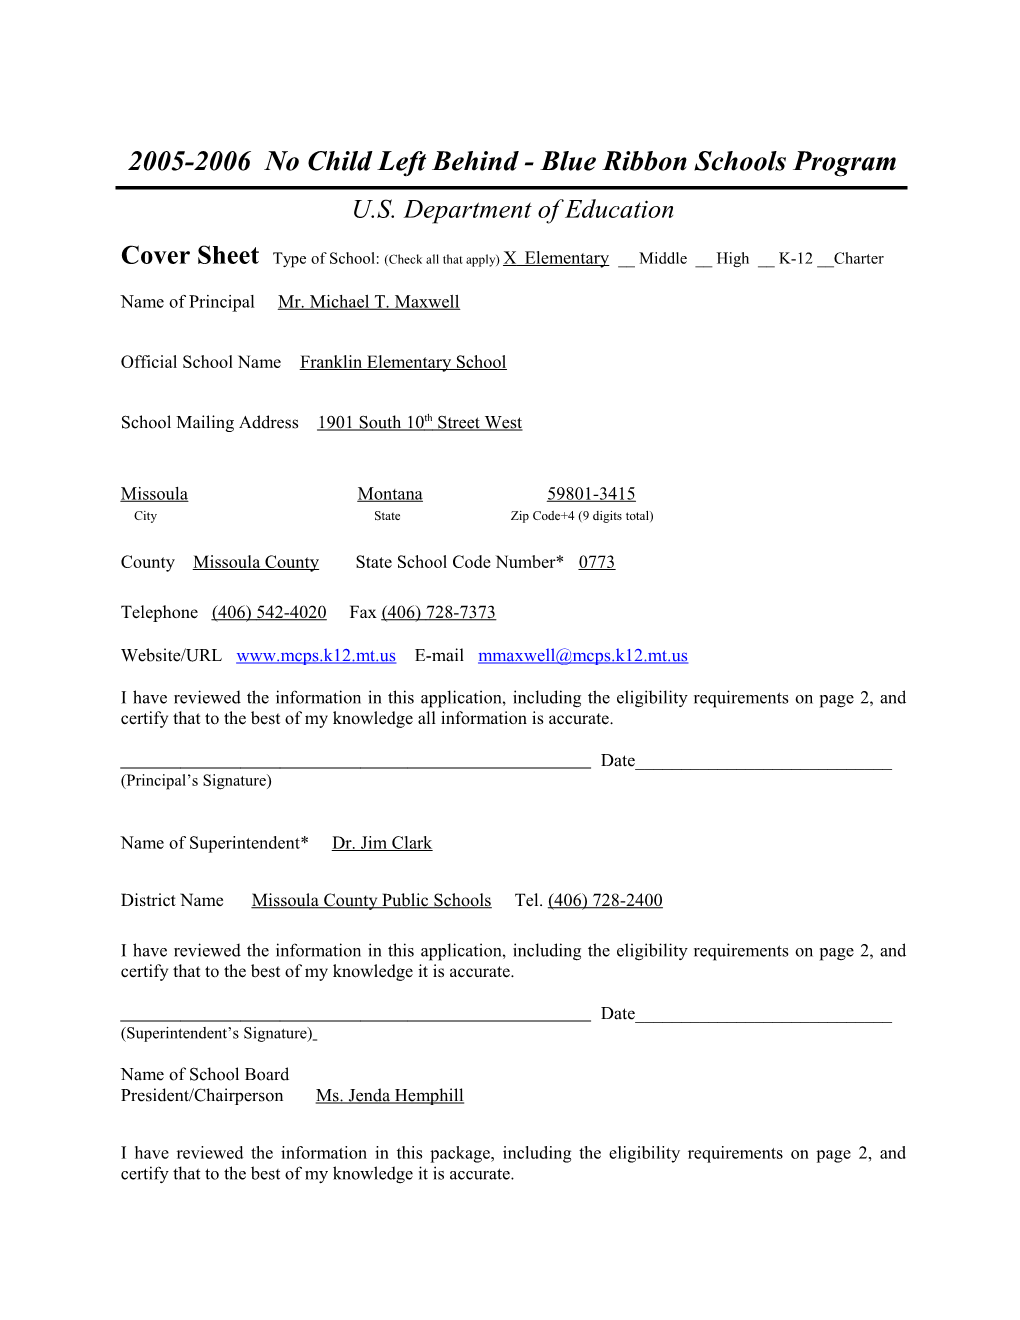 Application: 2005-2006, No Child Left Behind - Blue Ribbon Schools Program (Msword) s6